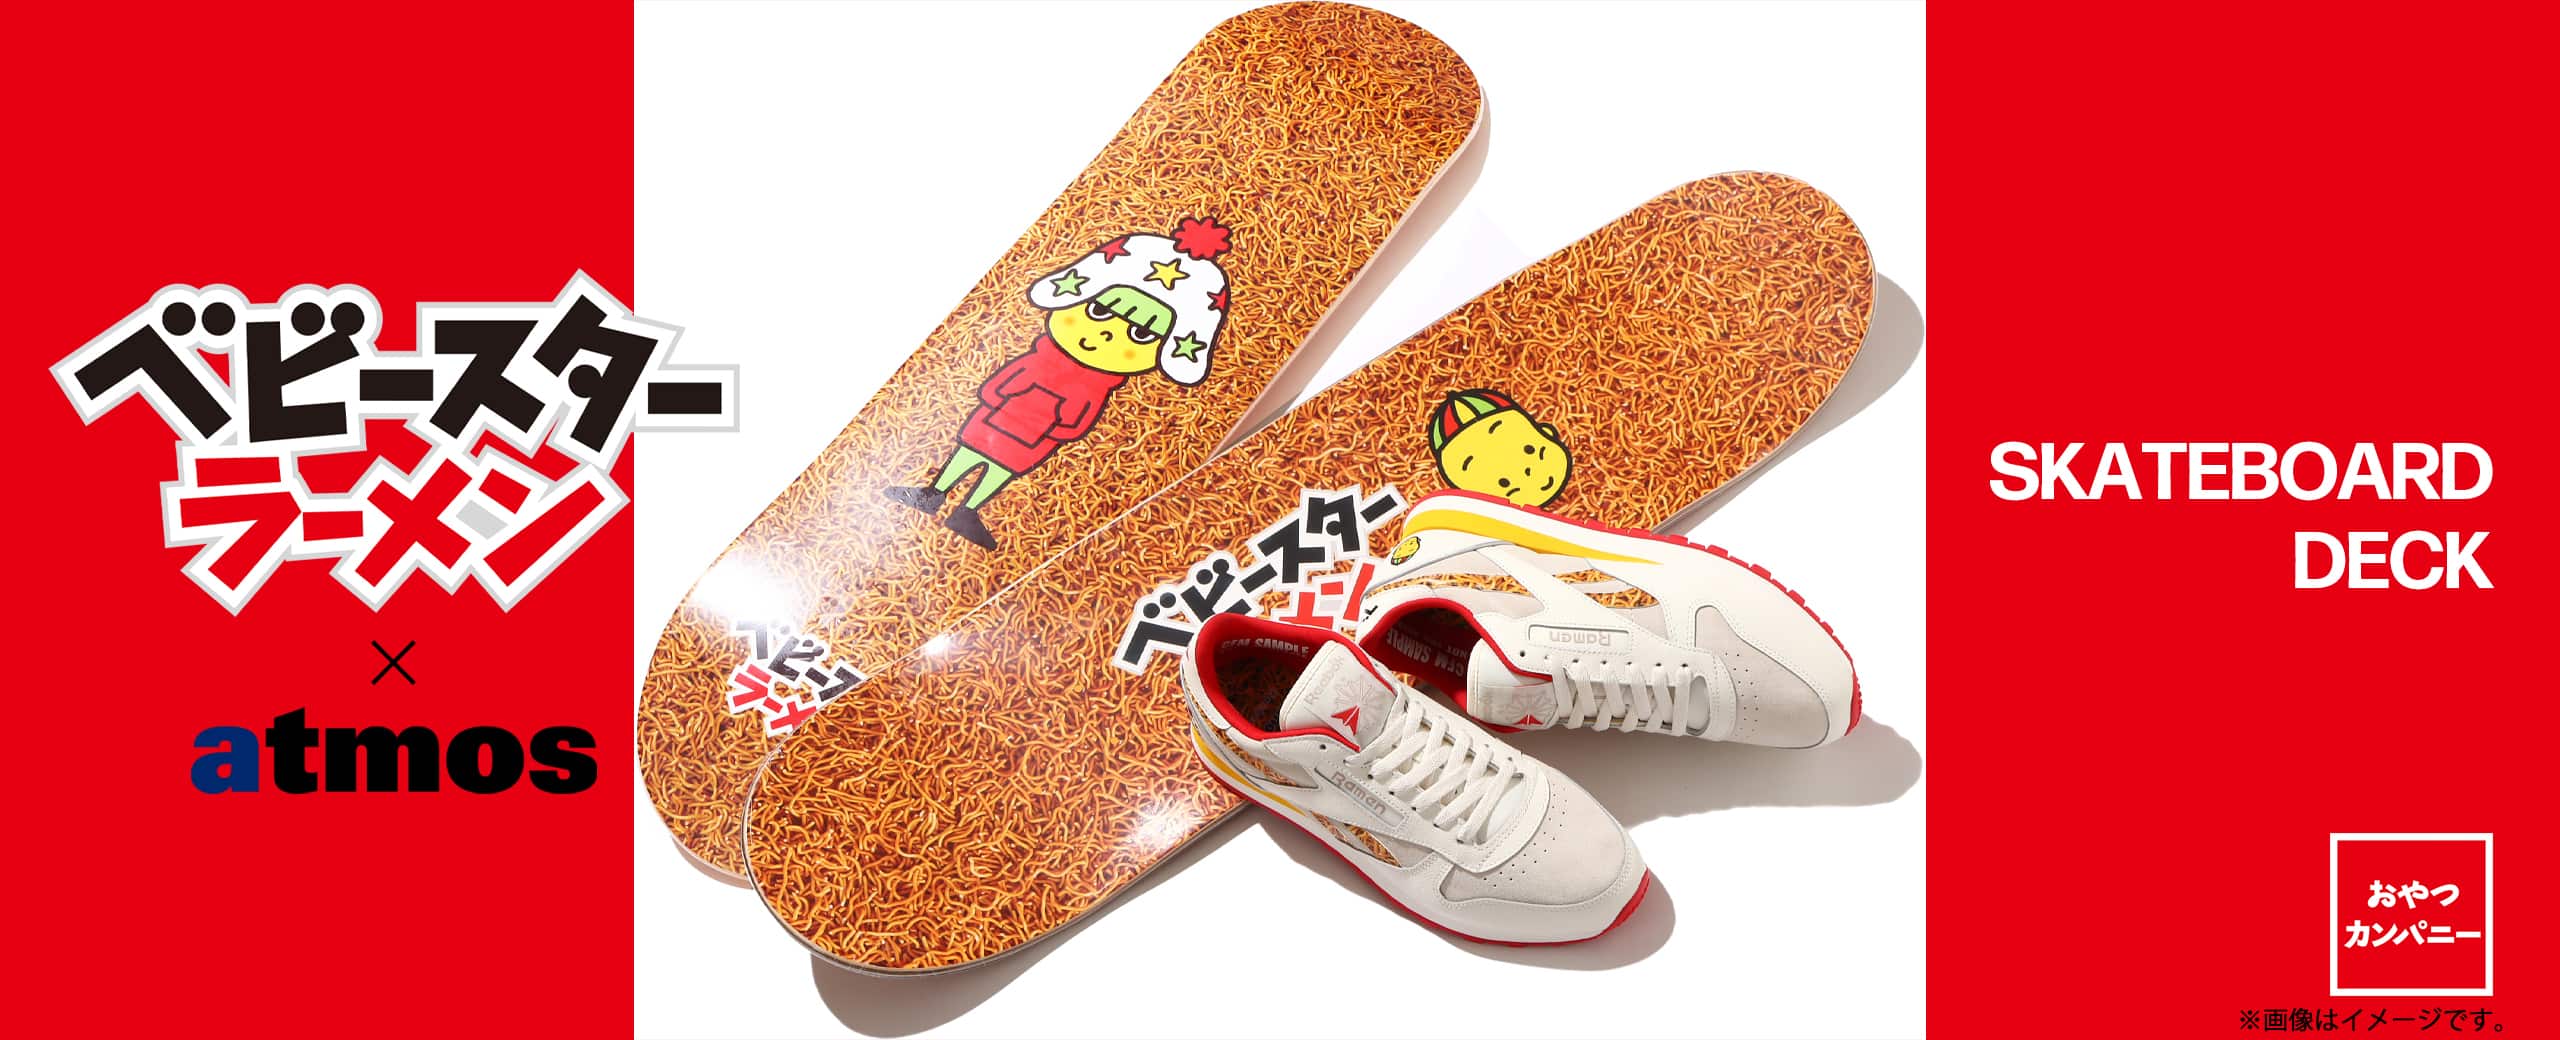 BABY STAR x atmos Skateboard deck